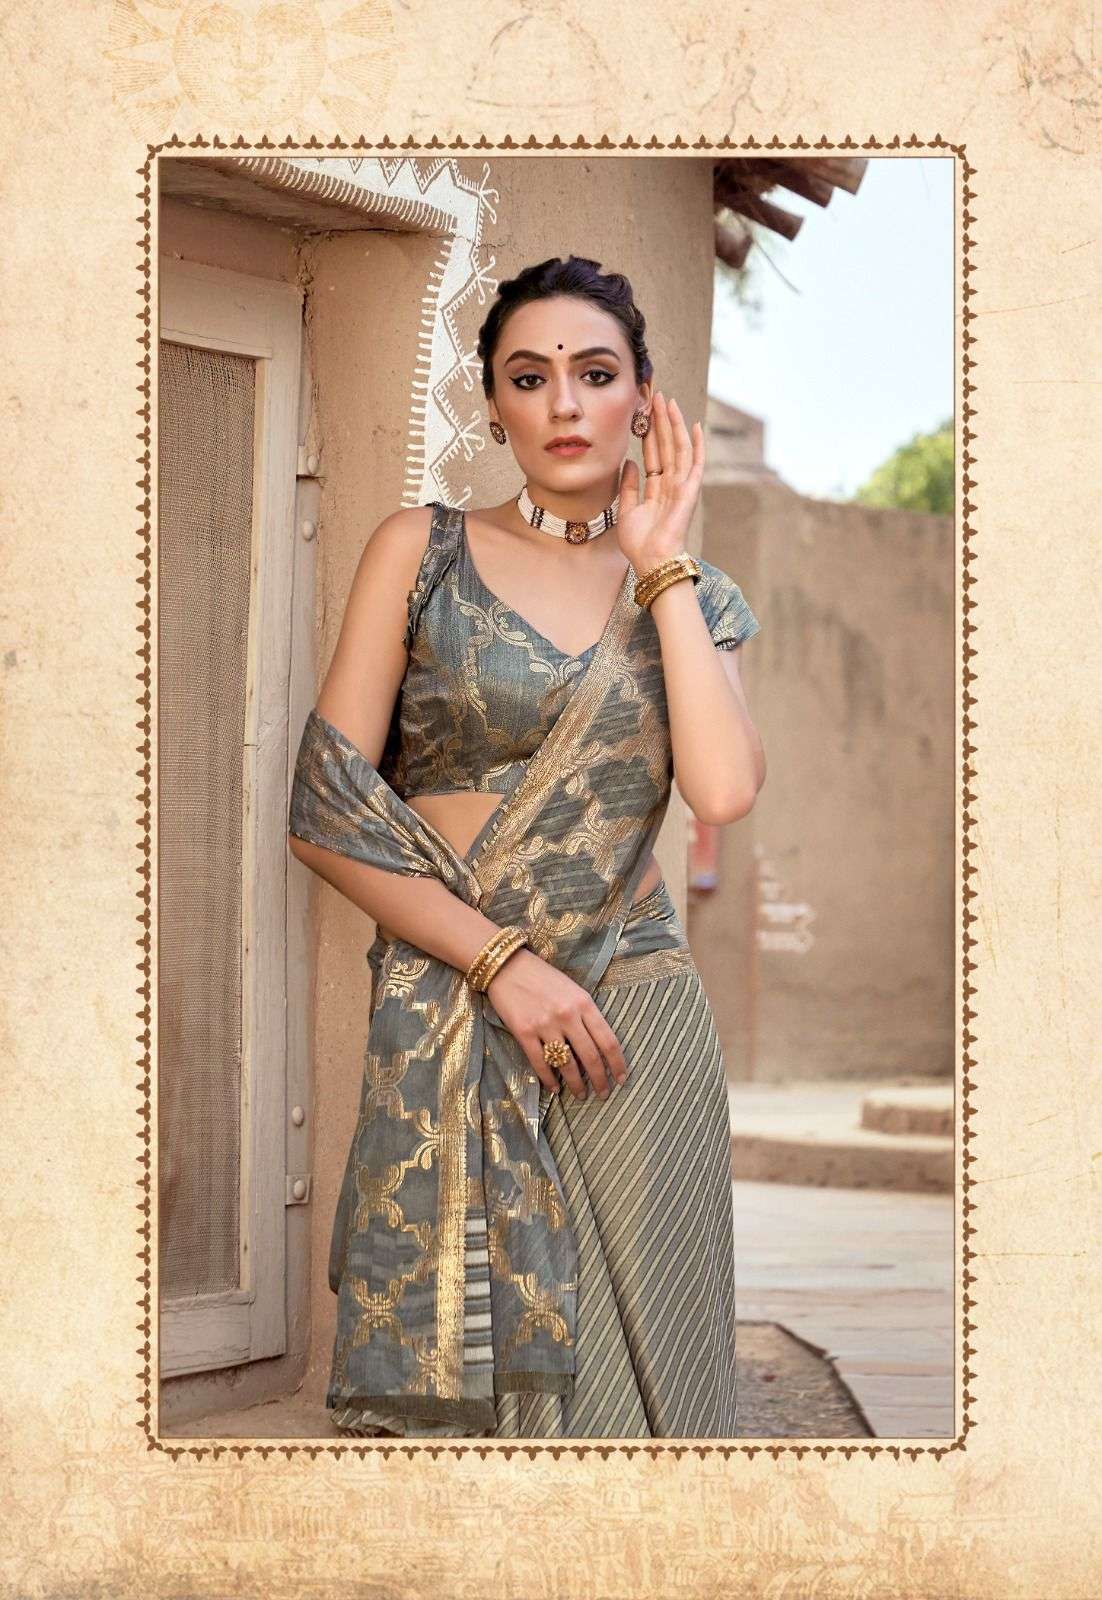 kashvi creation krishna 88001-88008 series latest designer saree catalogue wholesaler surat